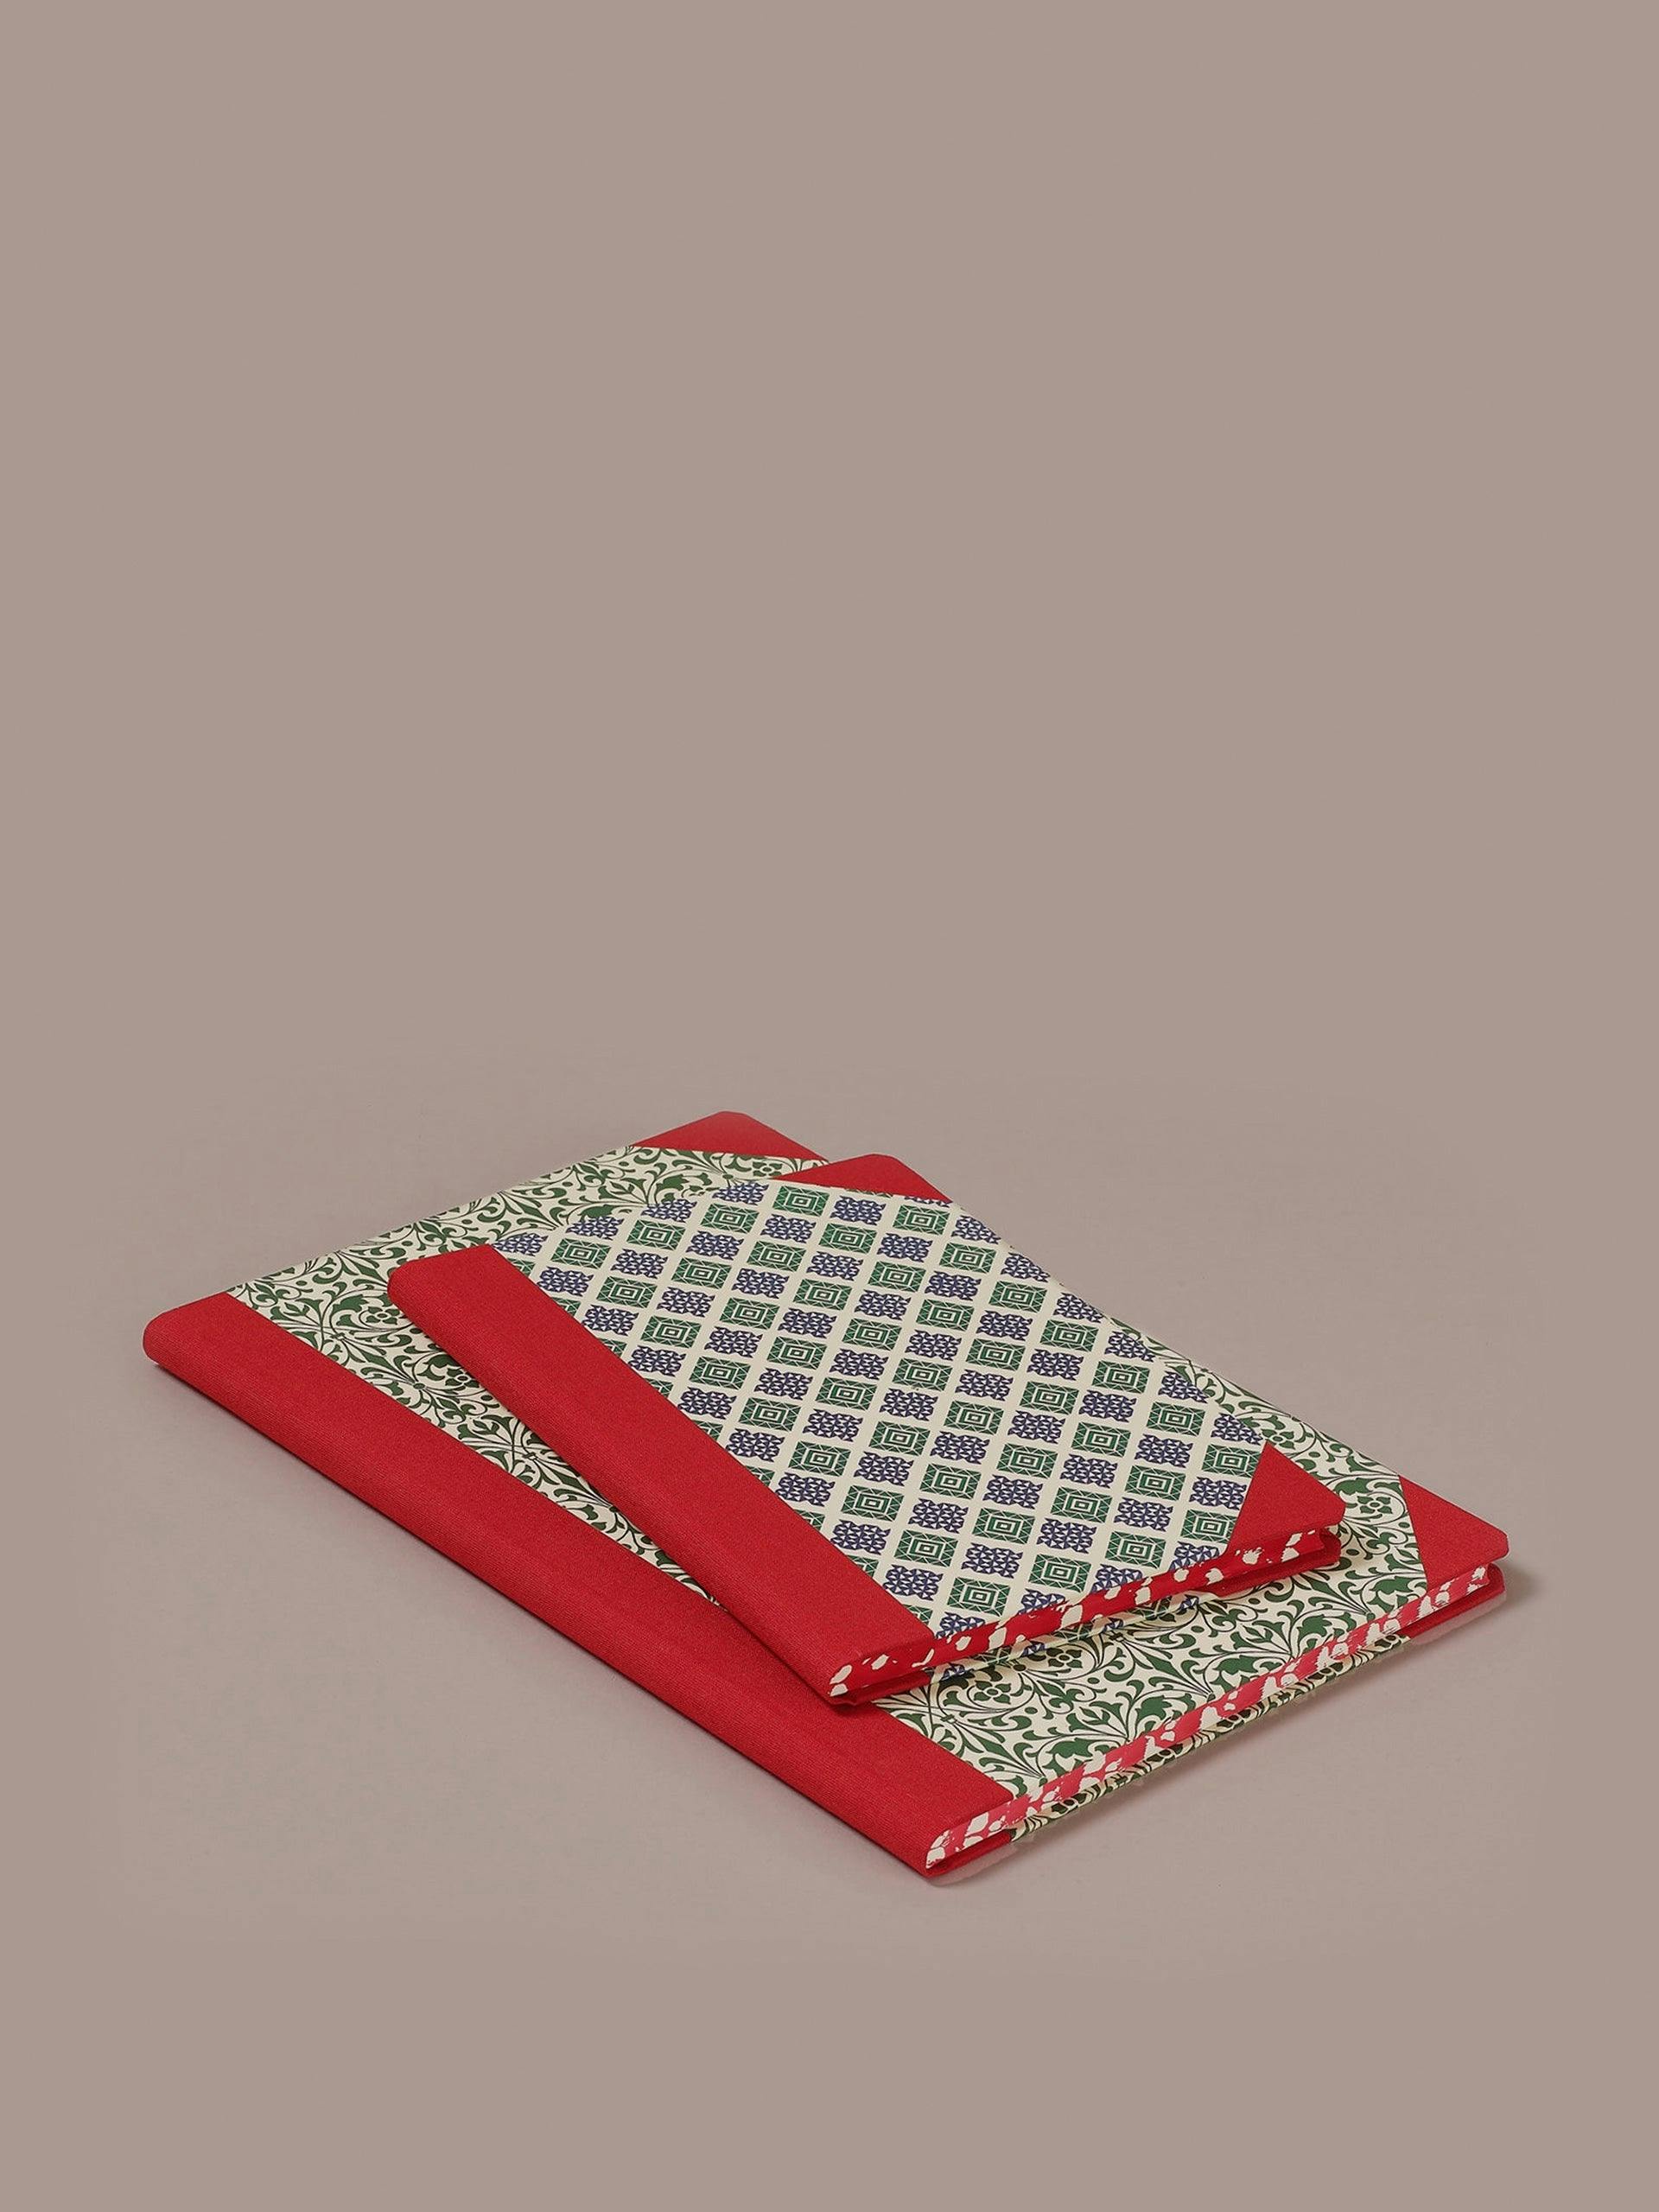 Hardback red notebook